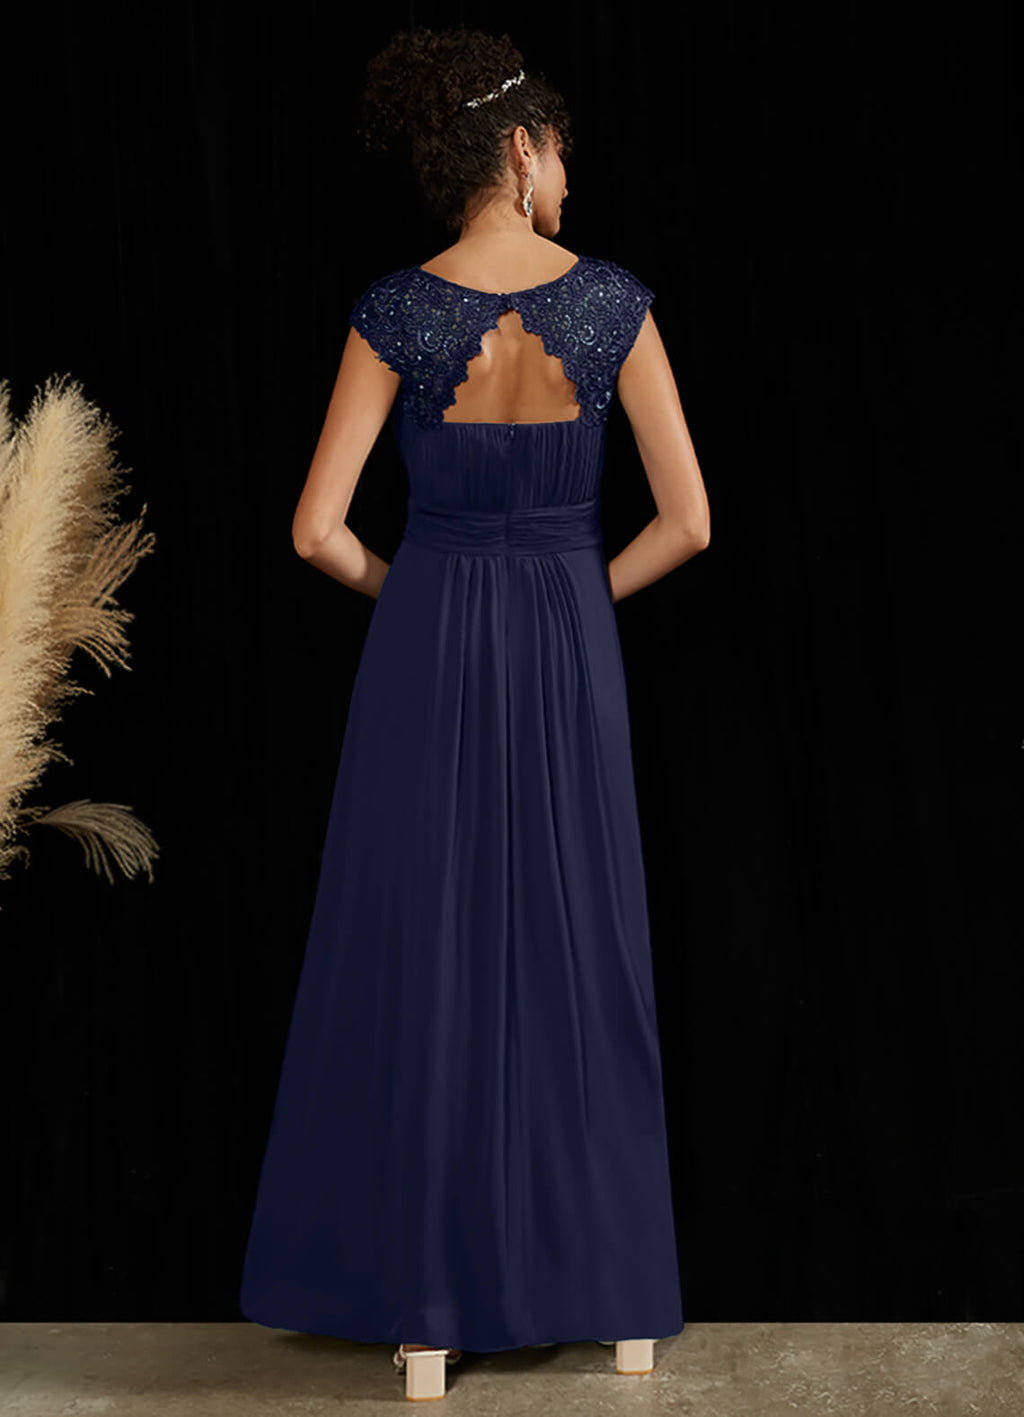 NZ Bridal Navy Blue Cap Sleeves Lace Chiffon Floor Length bridesmaid dresses 09996ep Ryan a